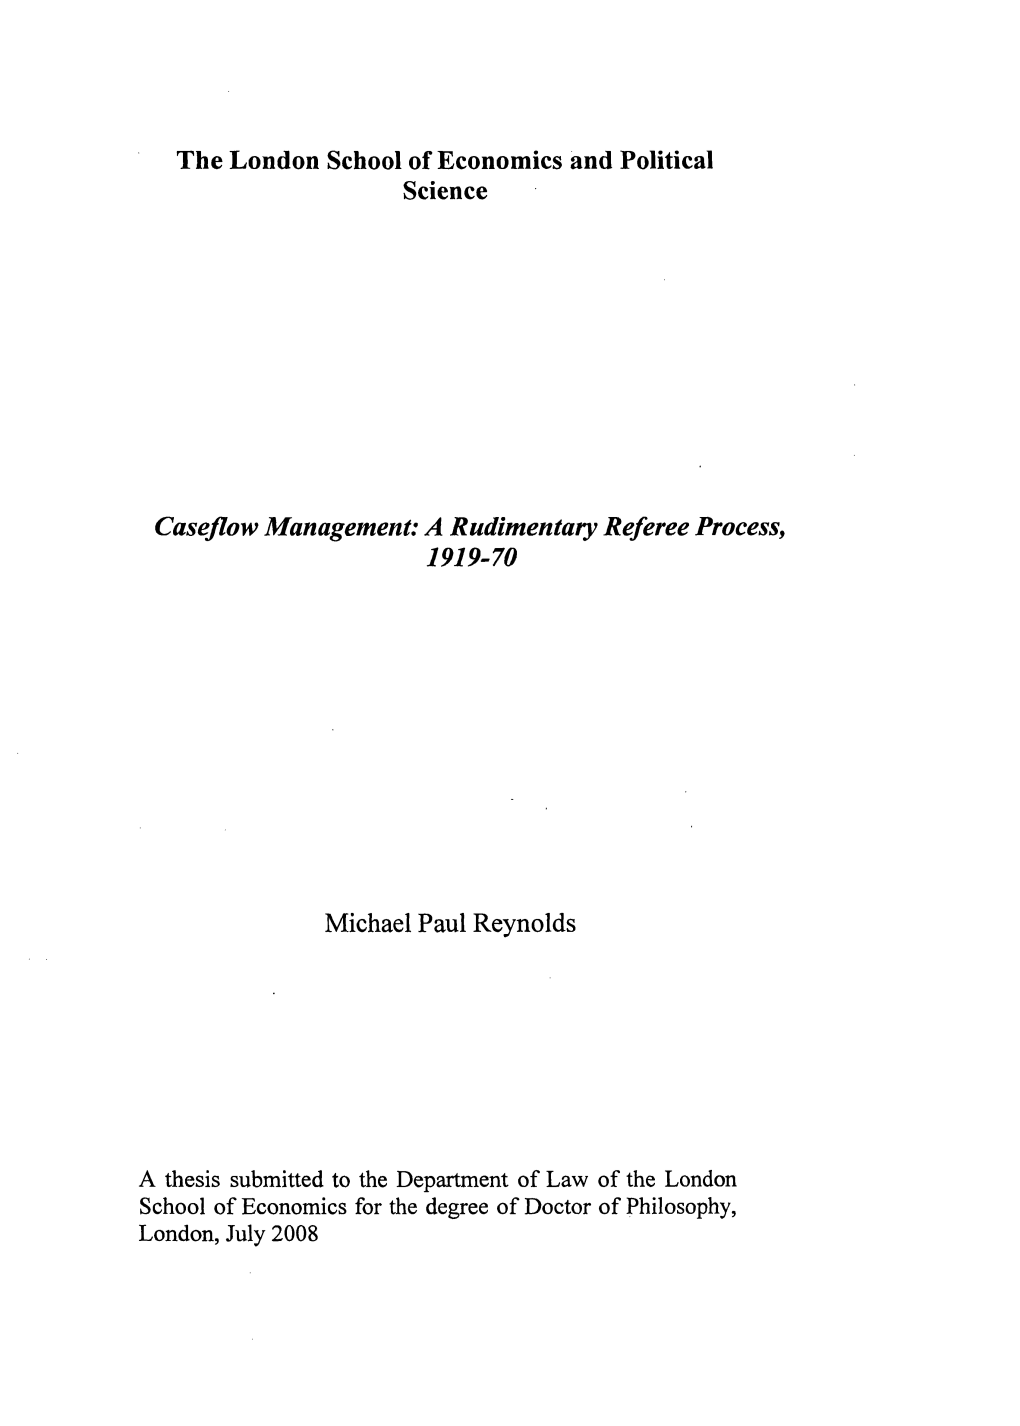 Caseflow Management: a Rudimentary Referee Process , 1919-70